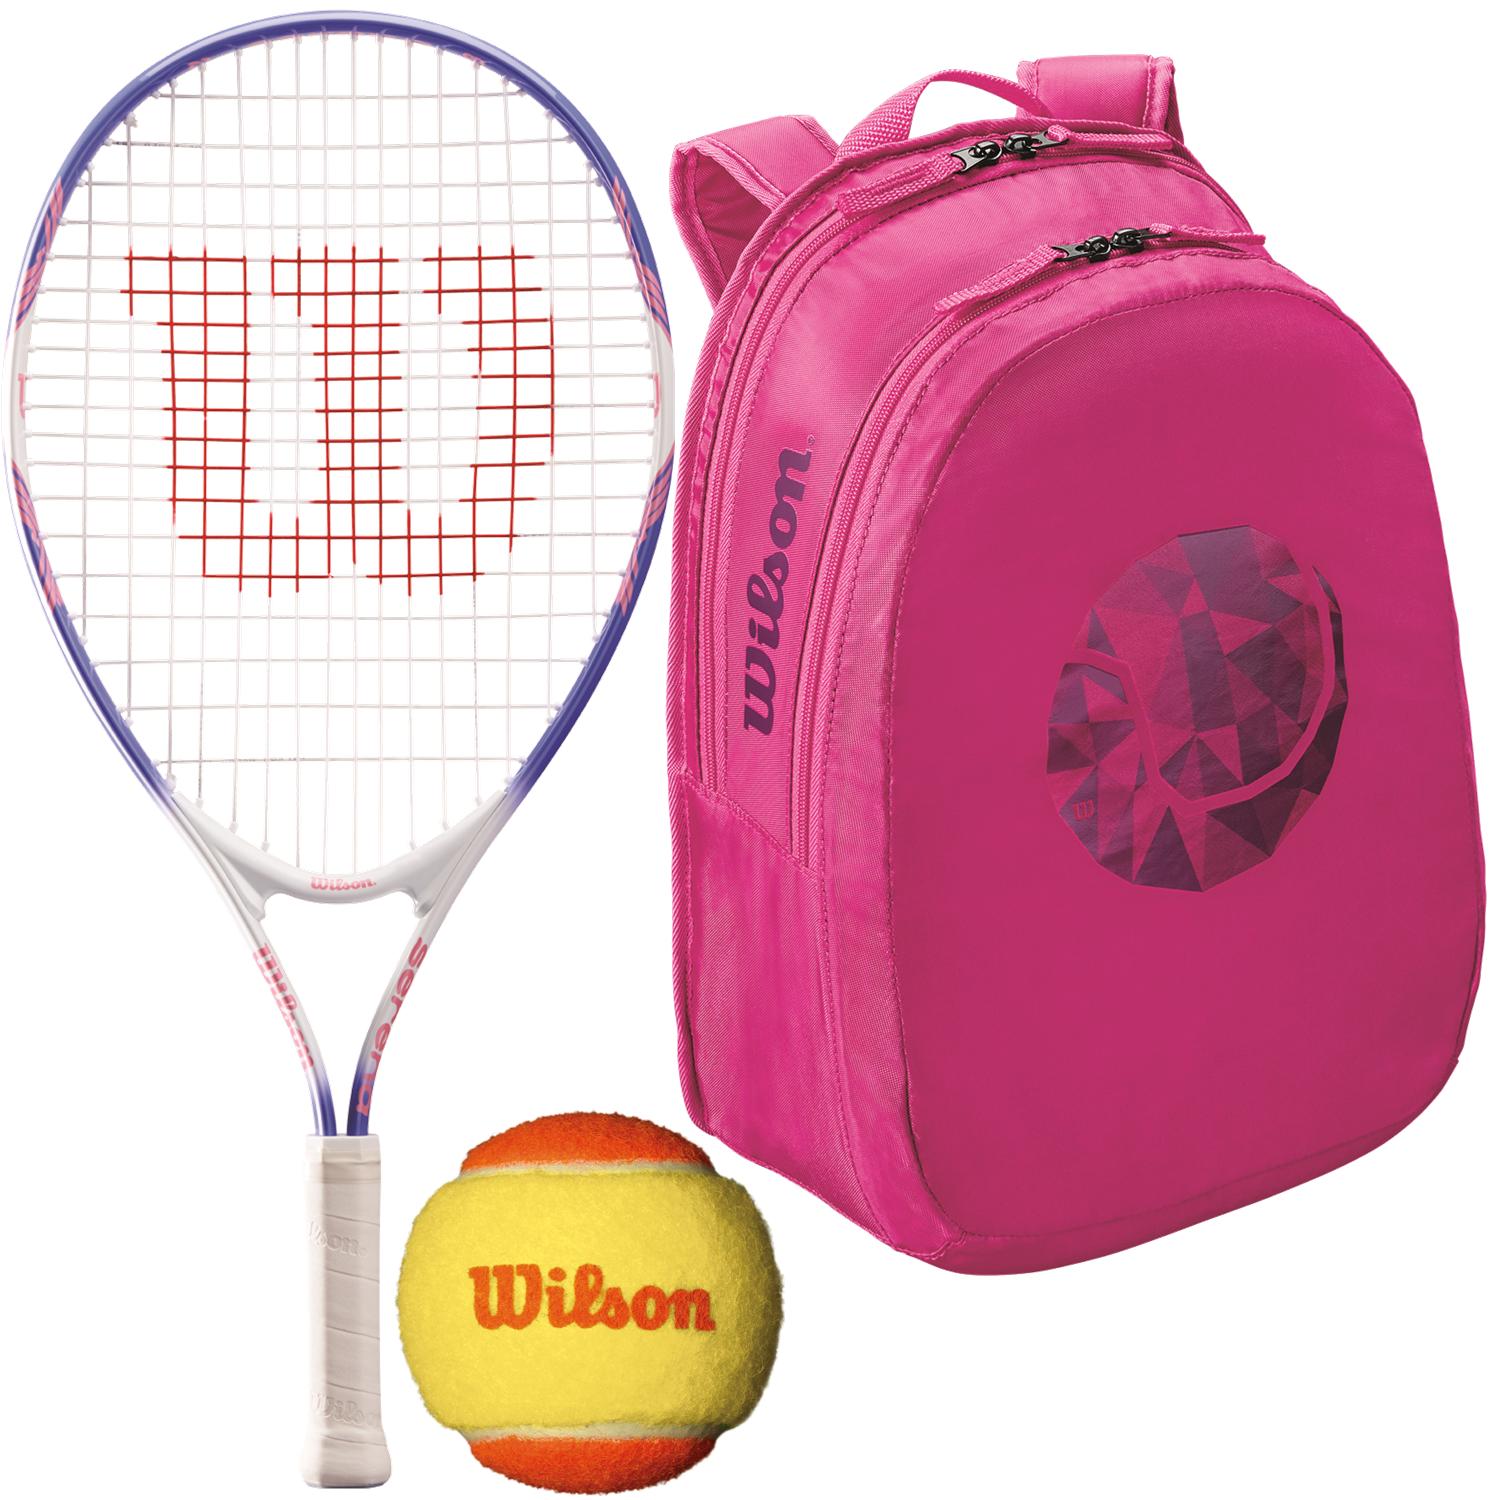 Wilson Serena Williams Junior Tennis Racquet, bundled with a Pink Junior Tennis Backpack and a 3-Pack of Orange Starter Tennis Balls